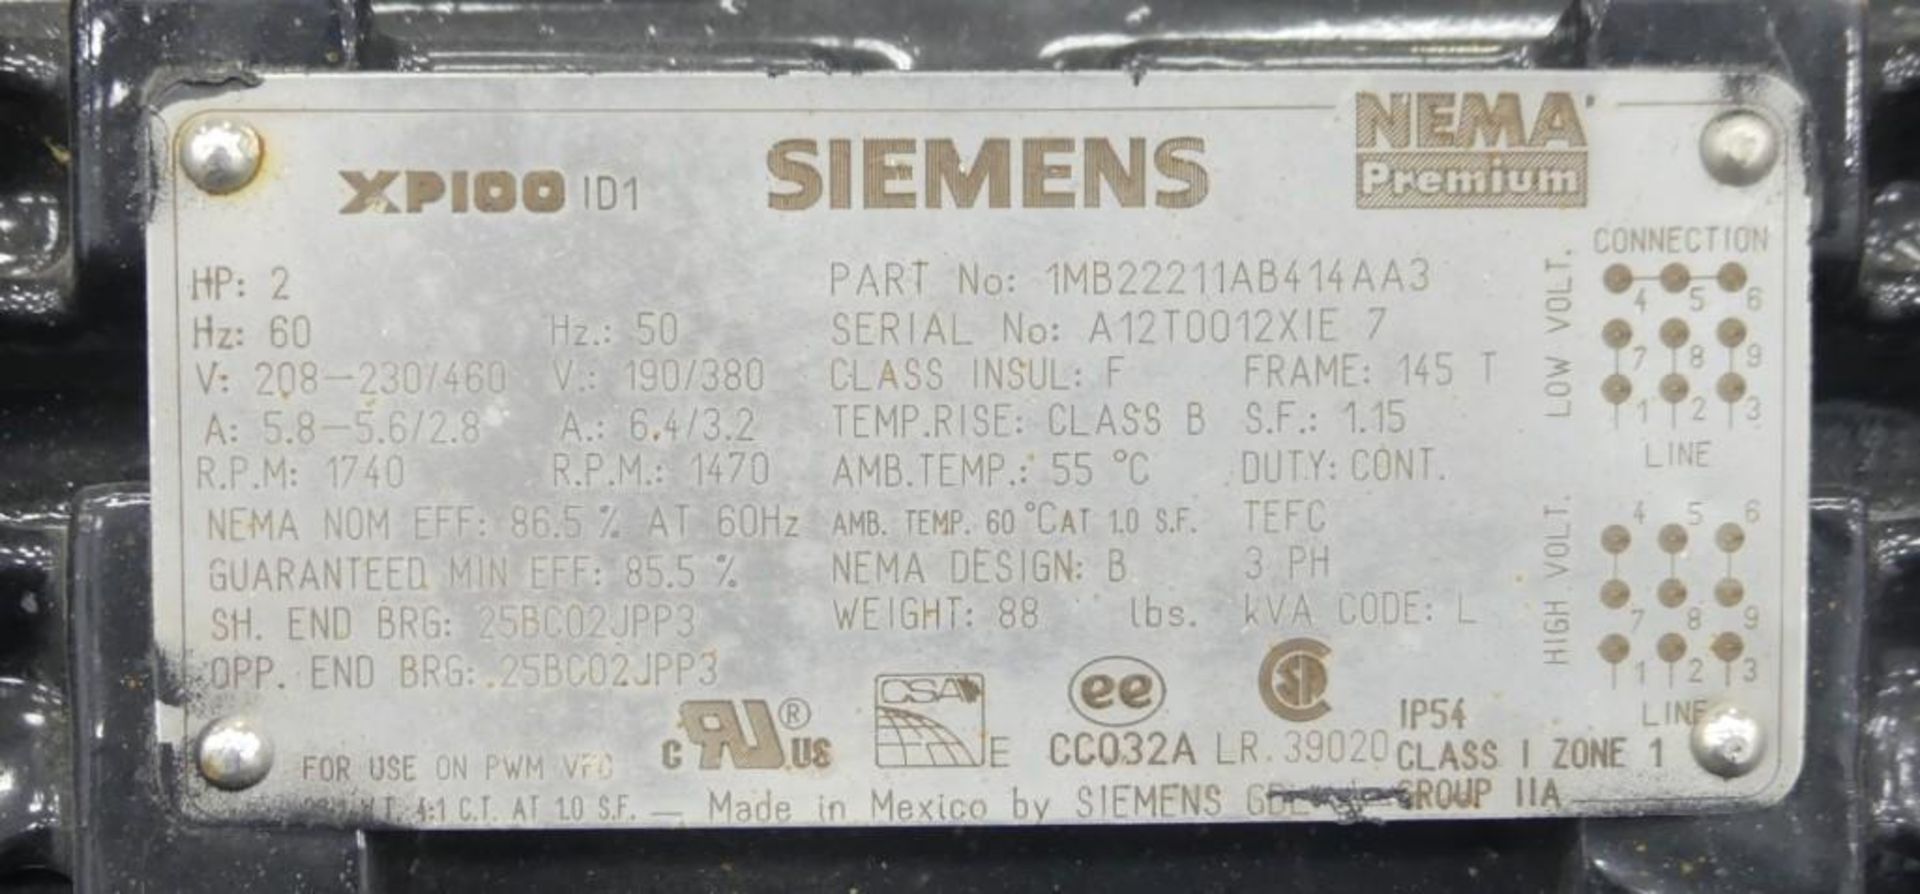 Siemens XP100 Chemical Pump - Image 7 of 10